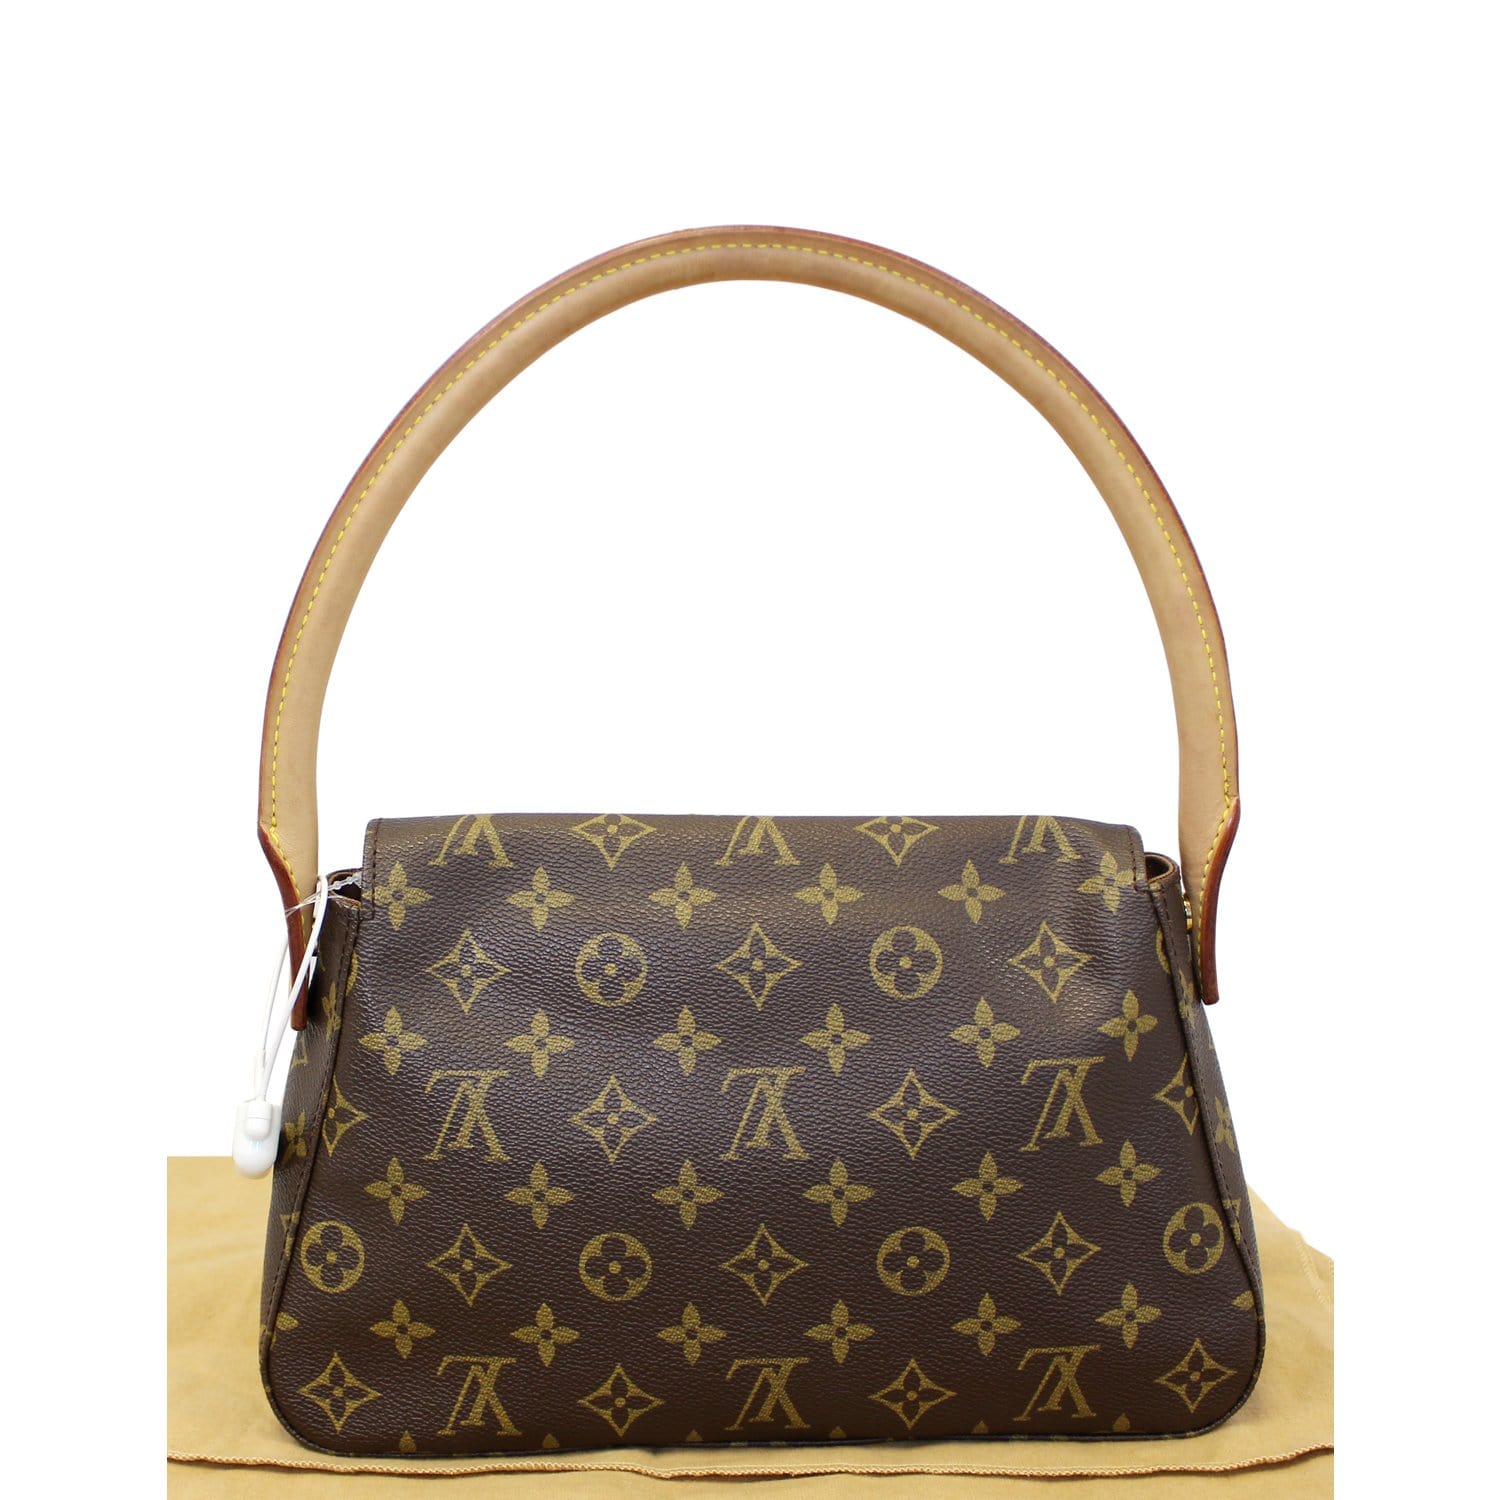 Replying to @amanda_berisford CAMERA BOX BAG AGH #swifttok #taylorswif, Louis Vuitton Bags